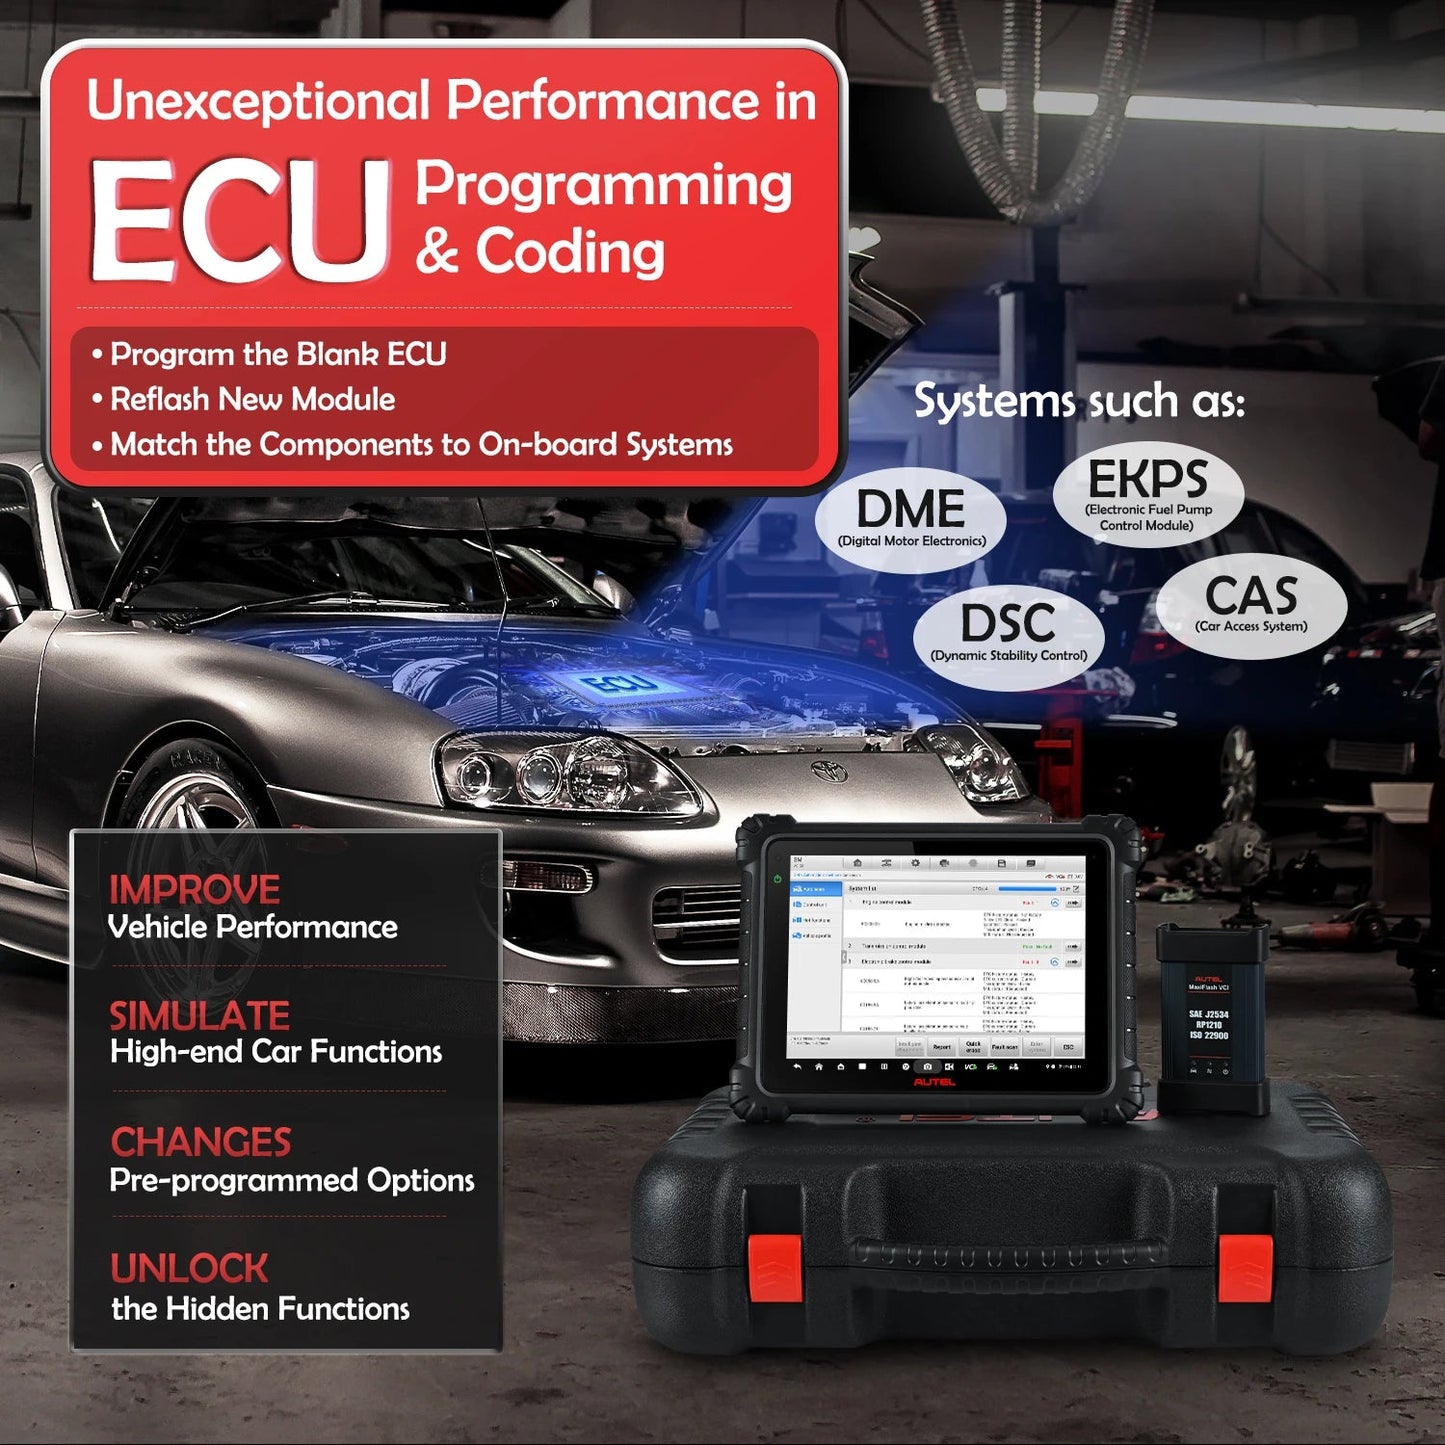 Autel MaxiCOM Ultra Lite S Diagnostic Tablet with BMW&Mercedes ECU Programming / Coding, Topology Module, Intelligent Diagnosis - Dynamex